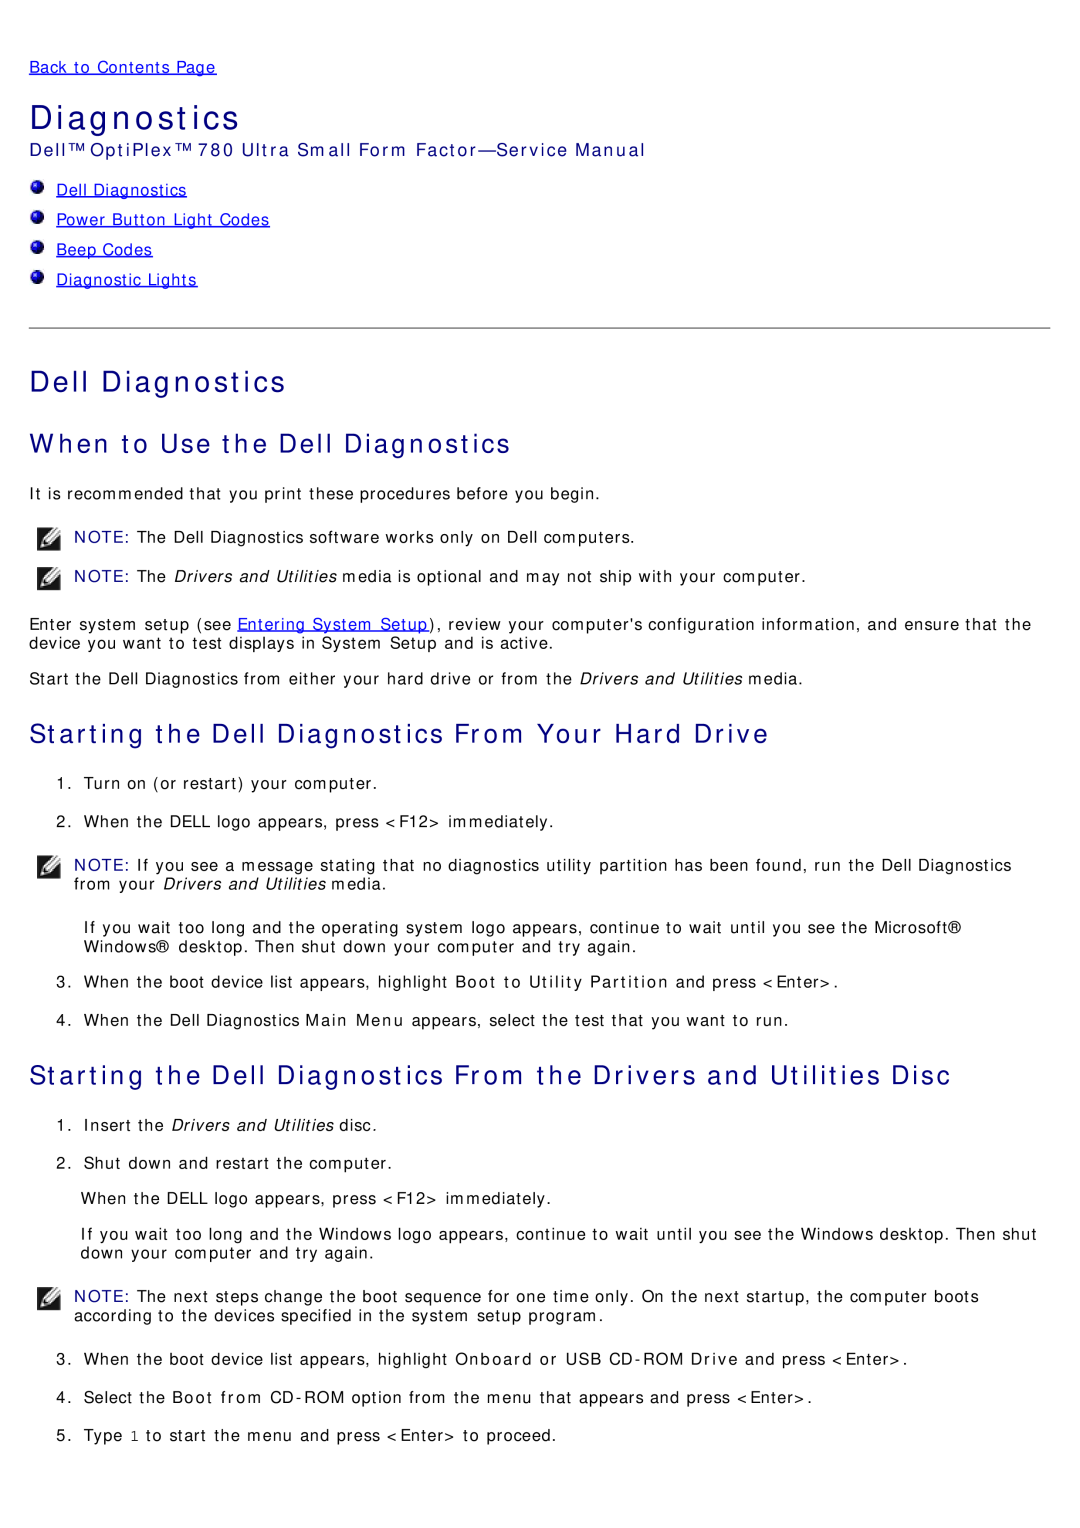 Dell 780 When to Use the Dell Diagnostics, Starting the Dell Diagnostics From Your Hard Drive, Diagnostic Lights 